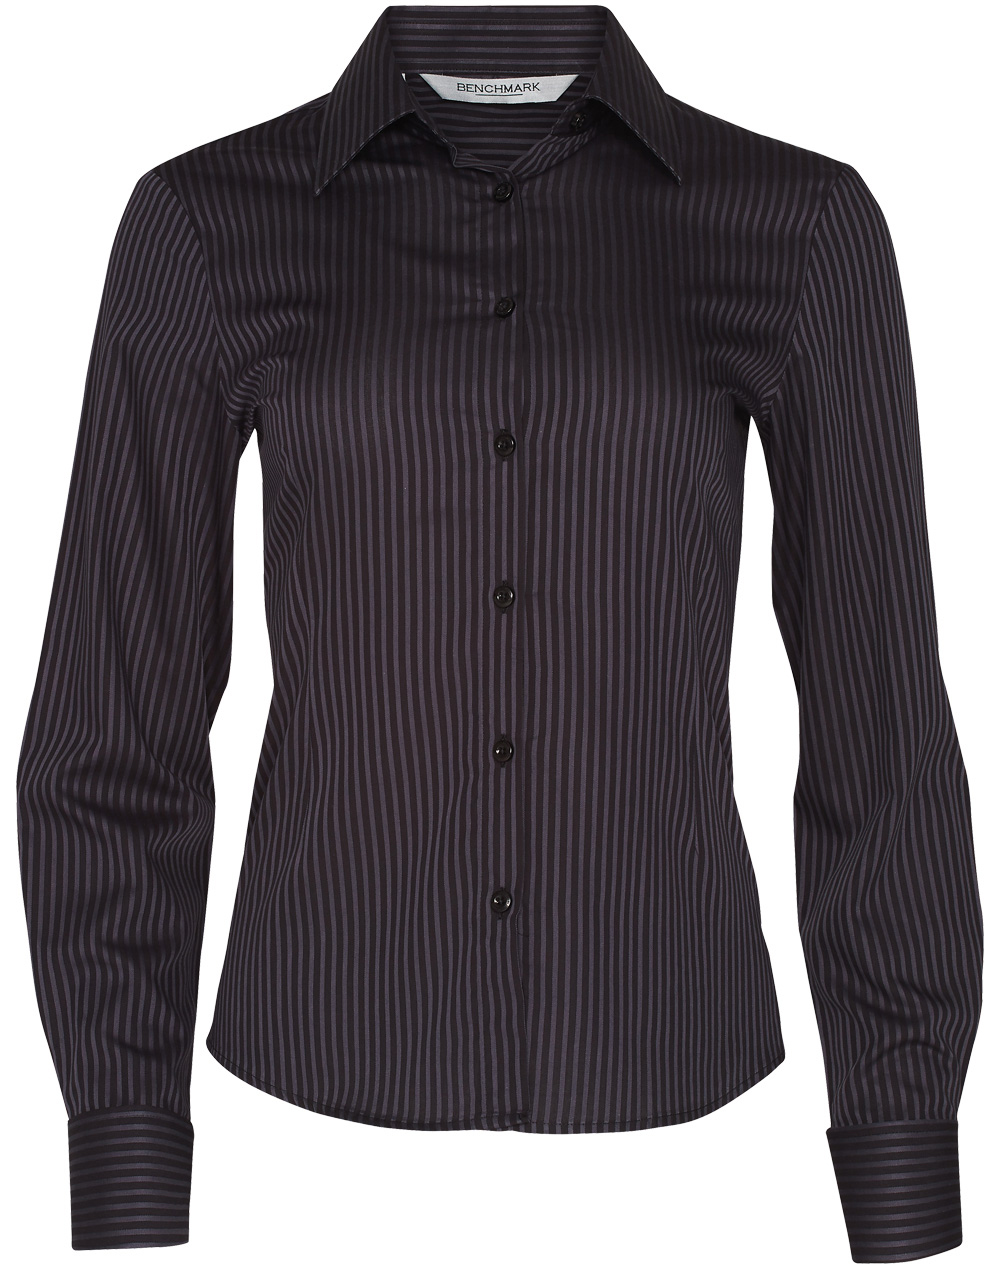 M8132 Women’s Dobby Stripe Long Sleeve Shirt